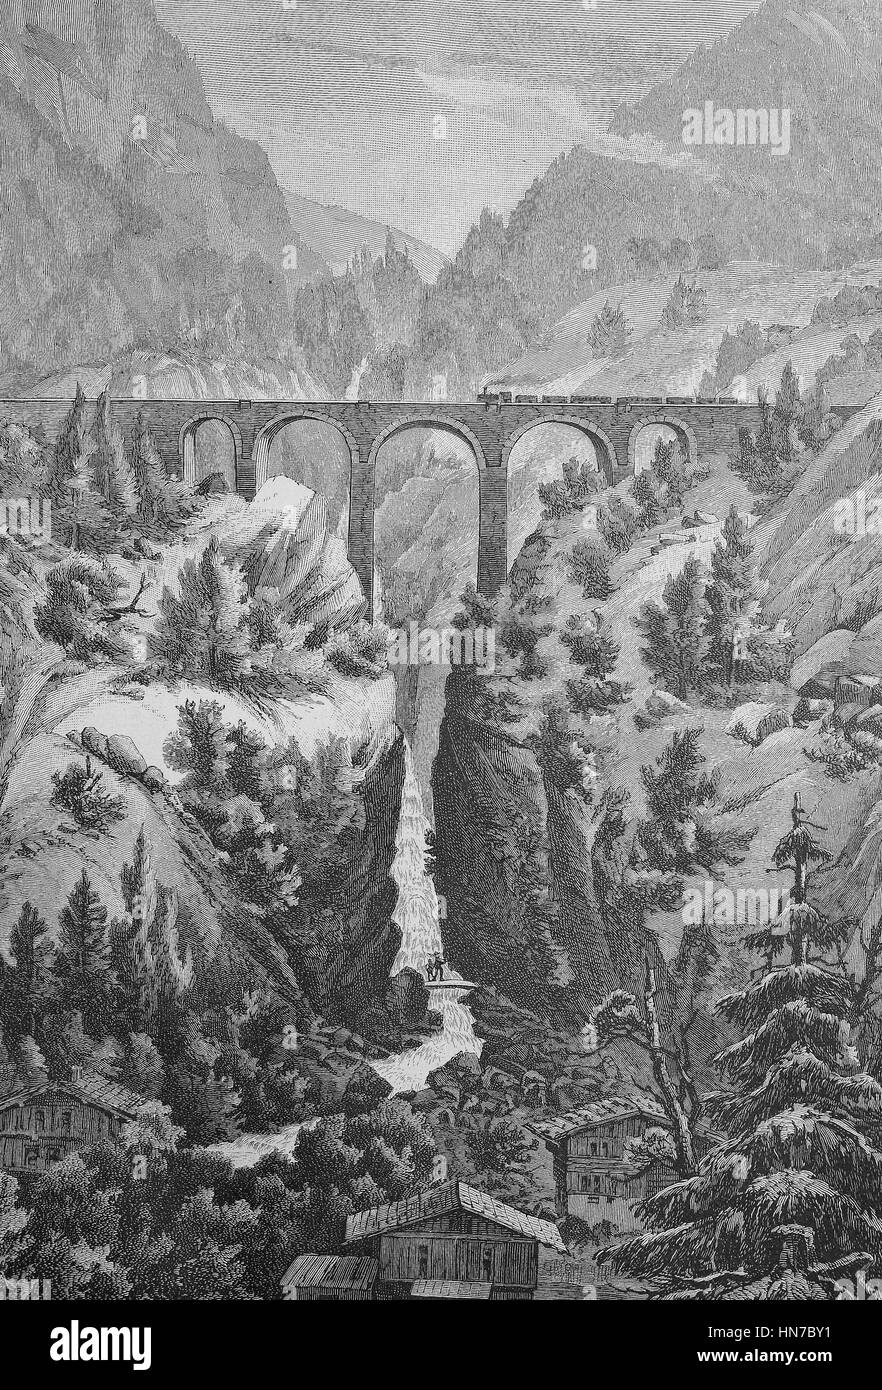 The Viaduct of the Arlbergbahn at Dalaas, Austria, Das Viadukt der Arlbergbahn bei Dalaas, Oesterreich, woodcut from 1885, digital improved Stock Photo